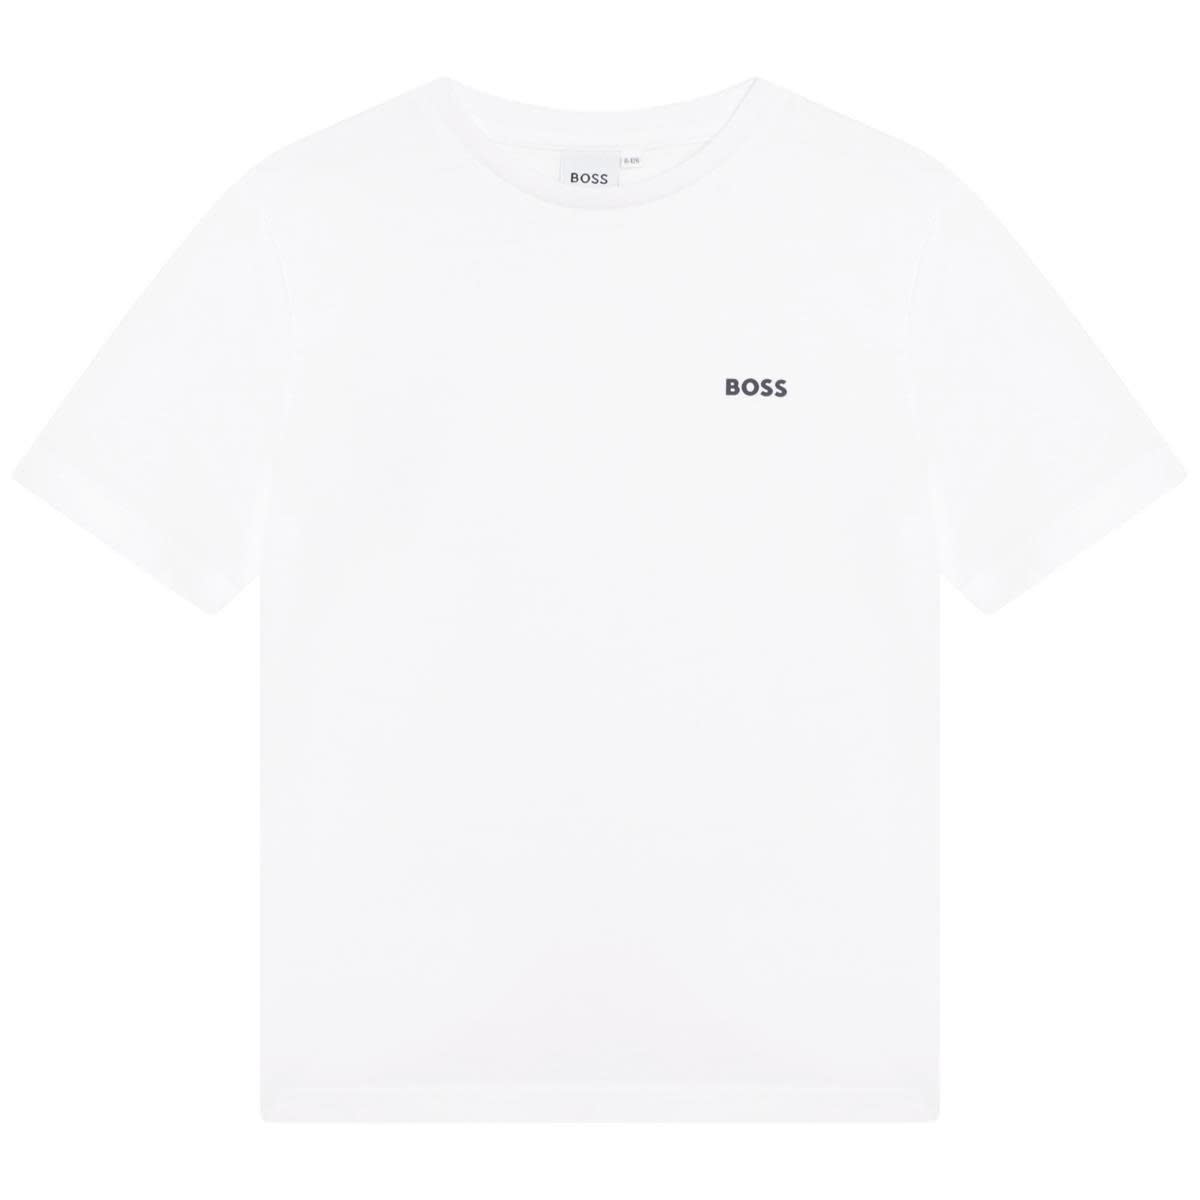 Hugo Boss Kids' T-shirt With Print In White